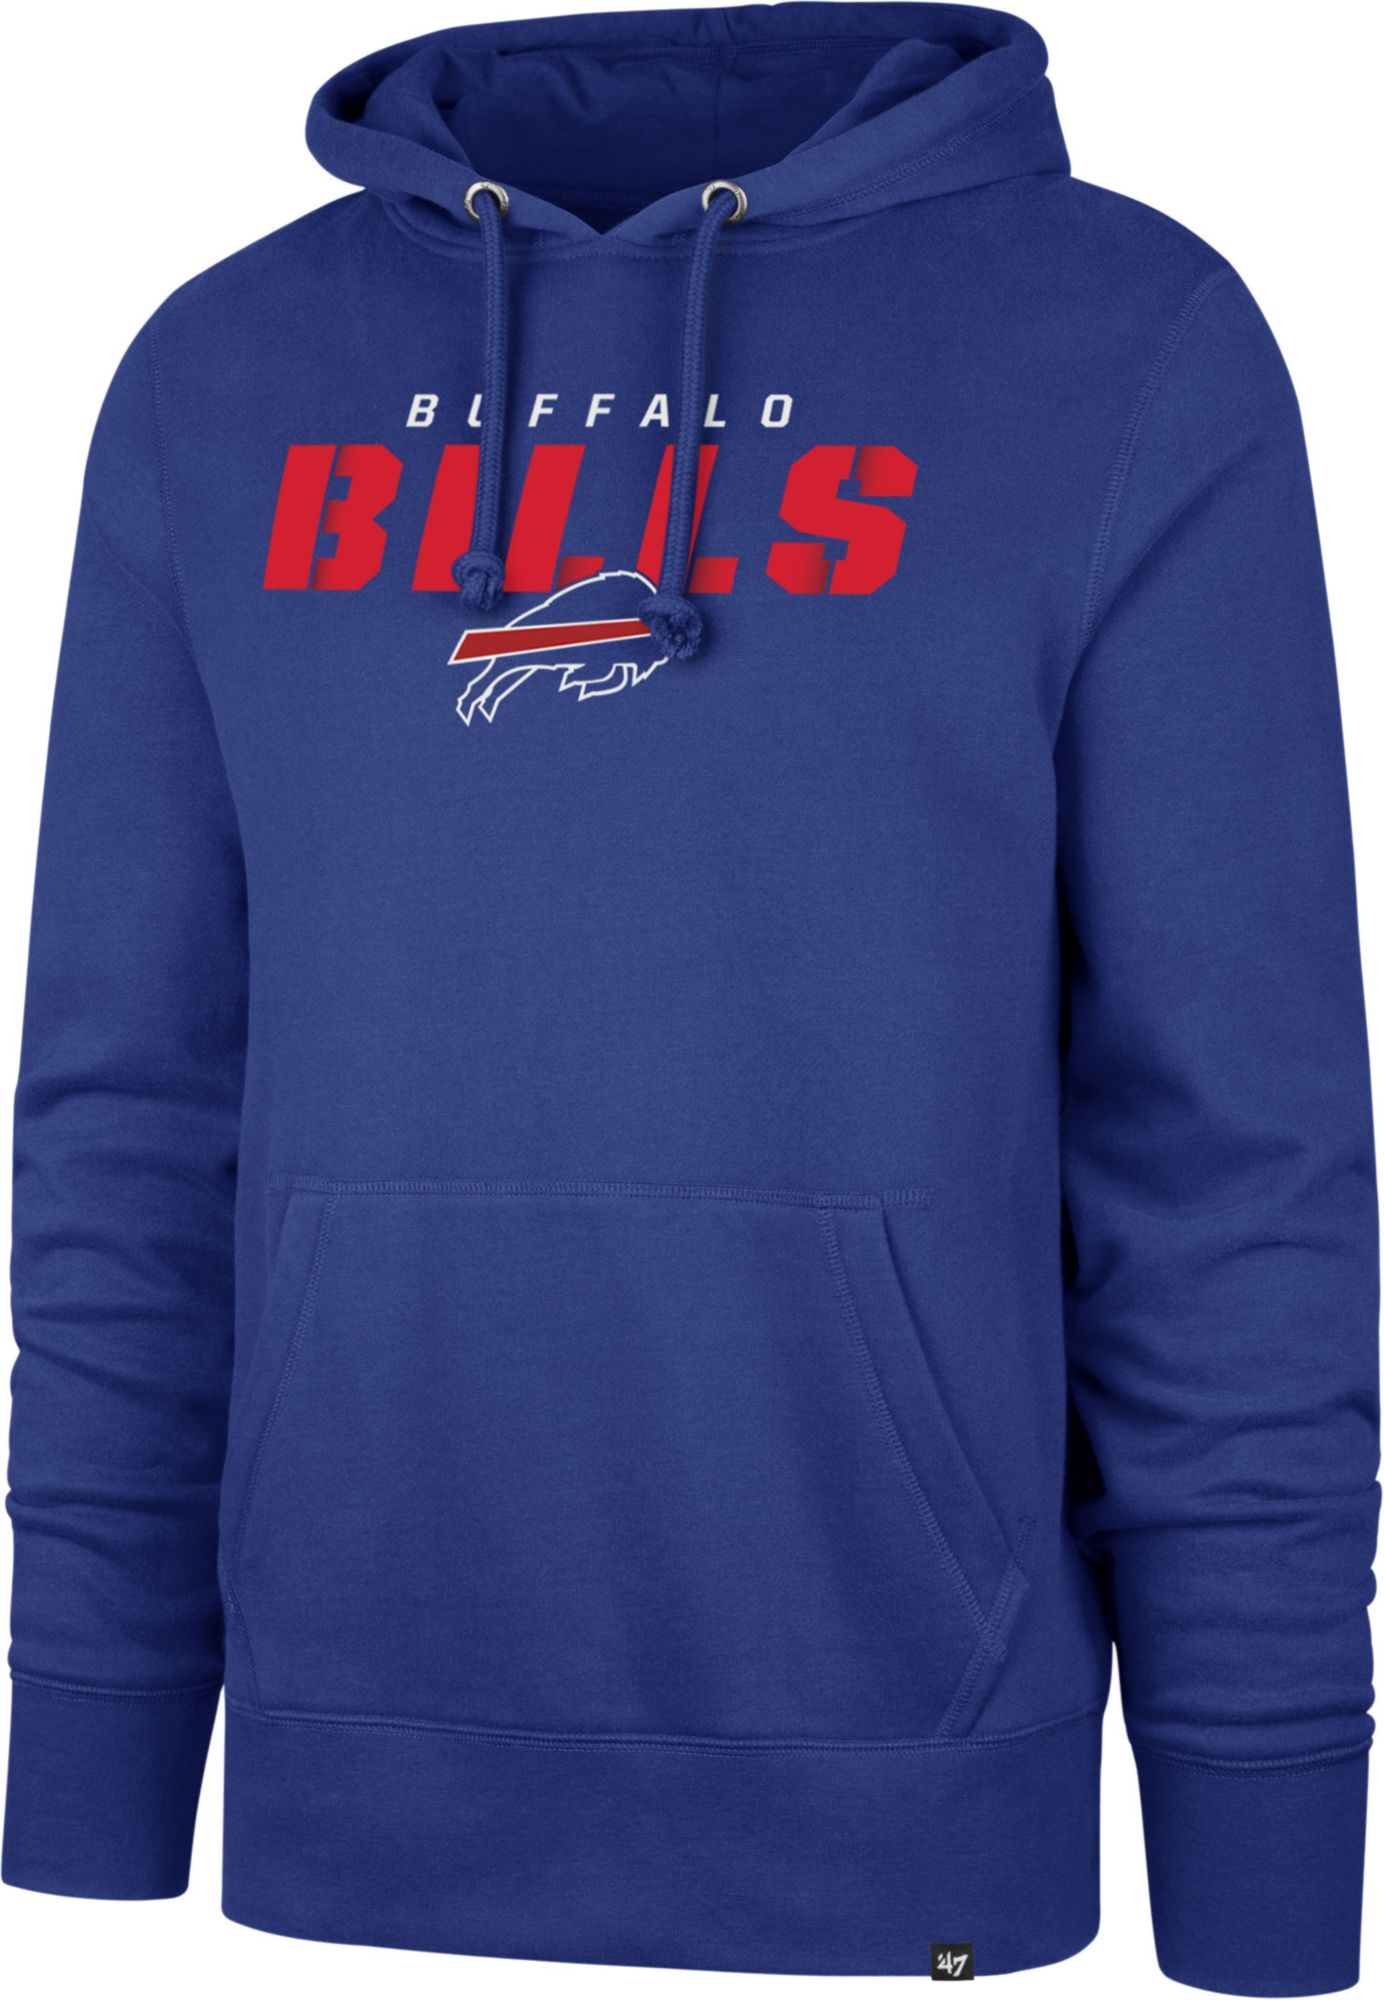 buffalo bills nike hoodie